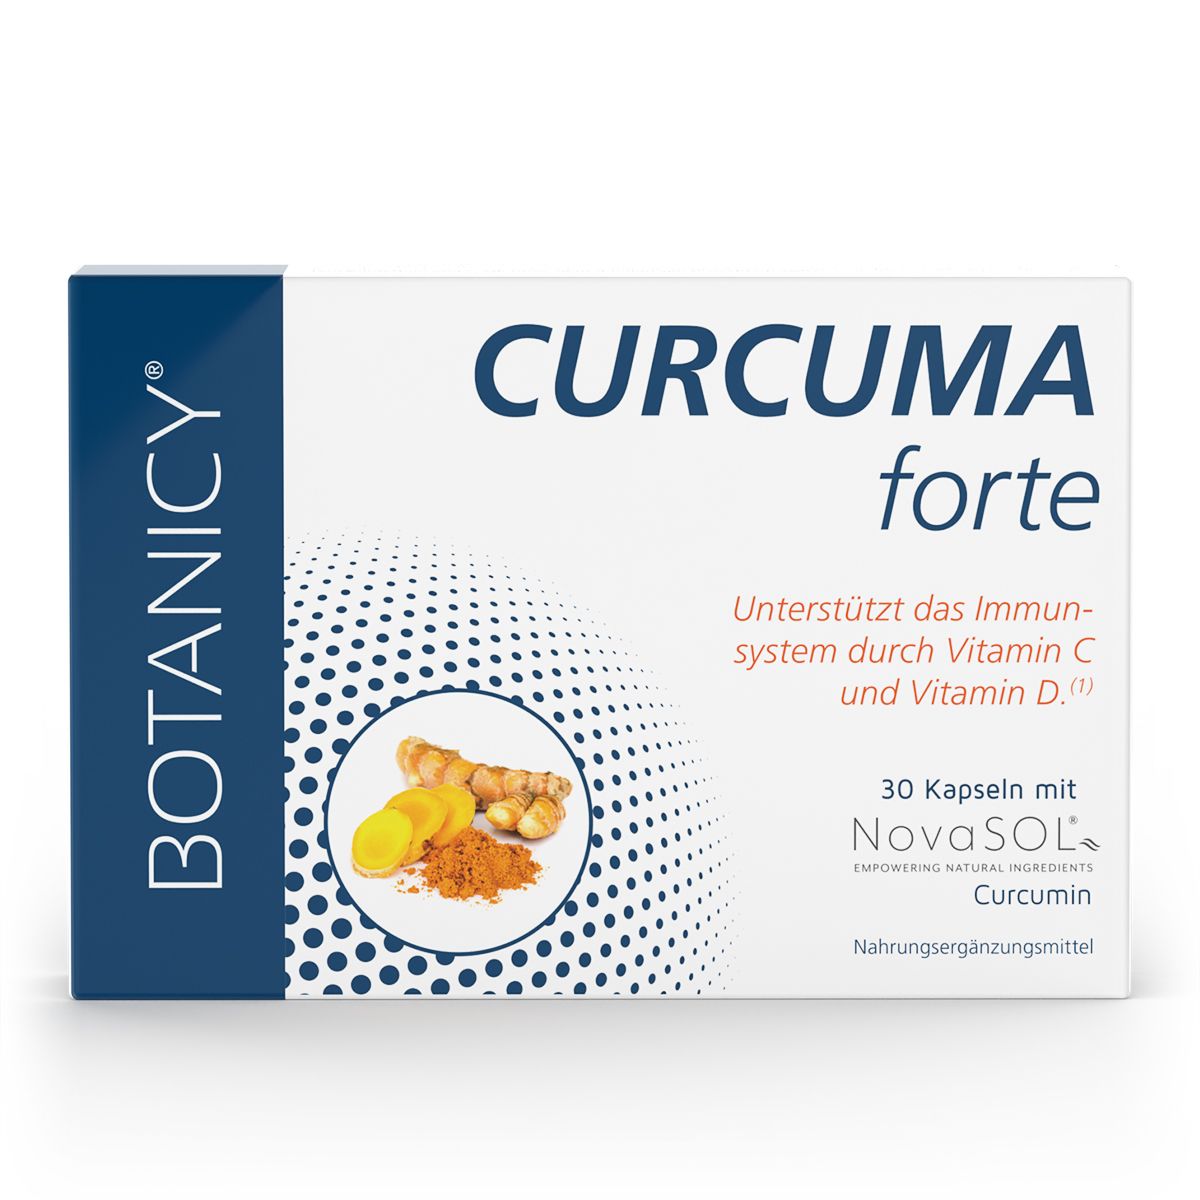 Curcuma forte with Novasol Curcumin